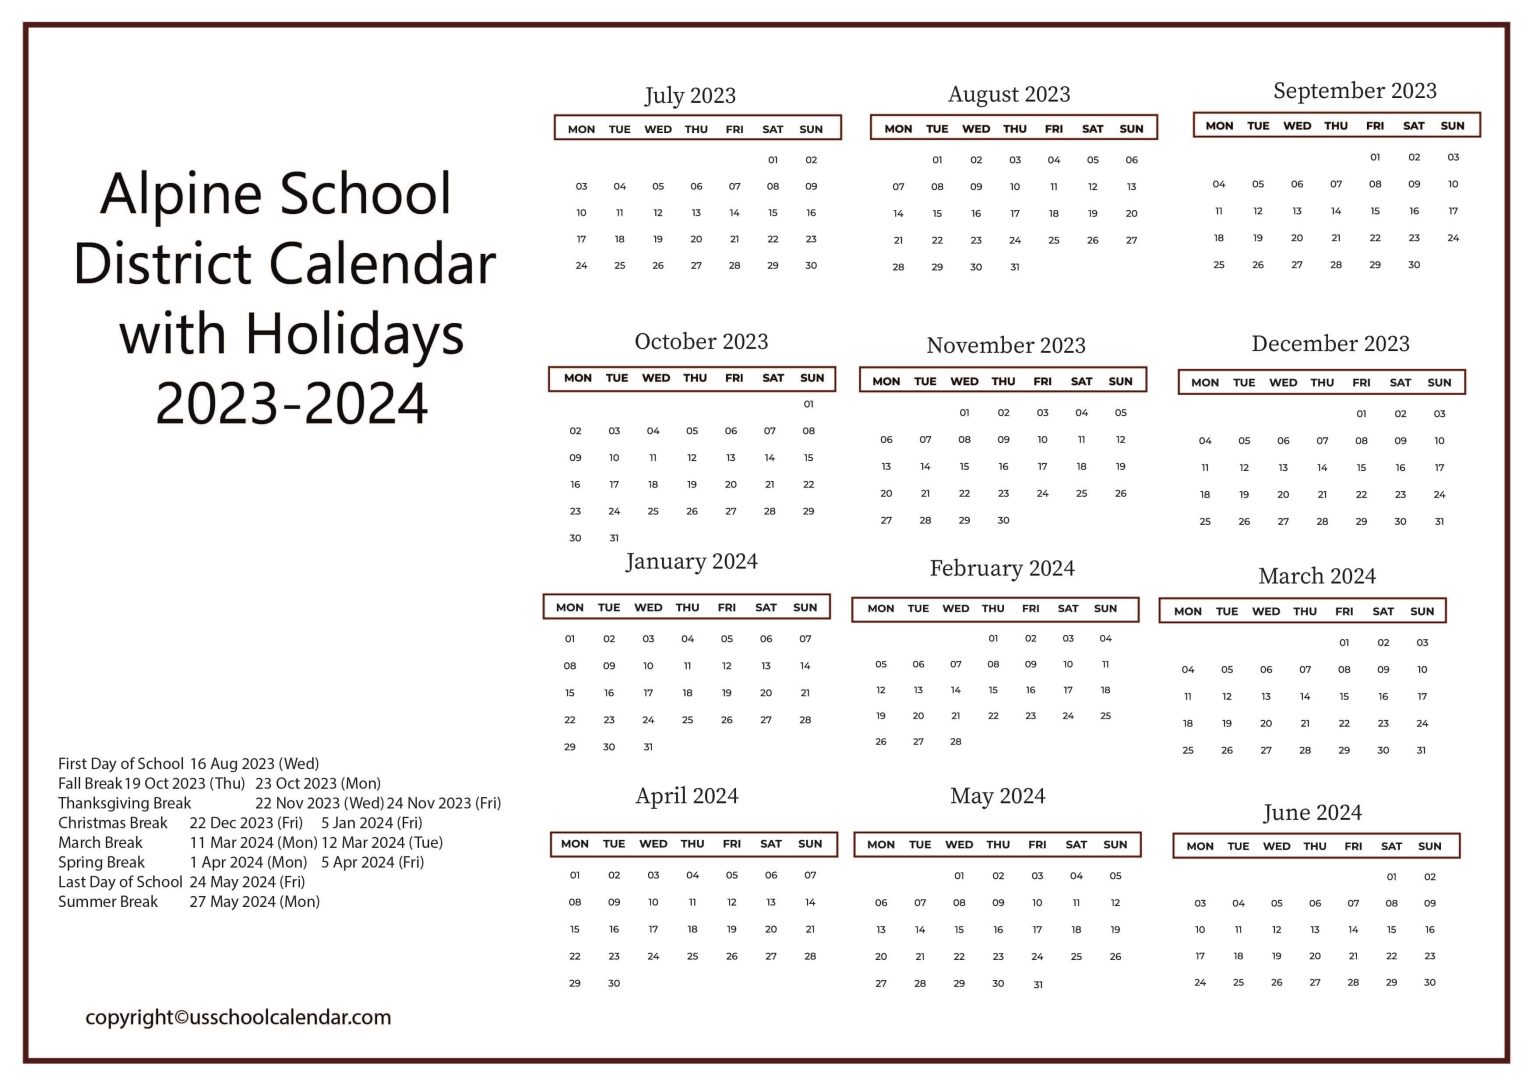 alpine-school-district-calendar-with-holidays-2023-2024